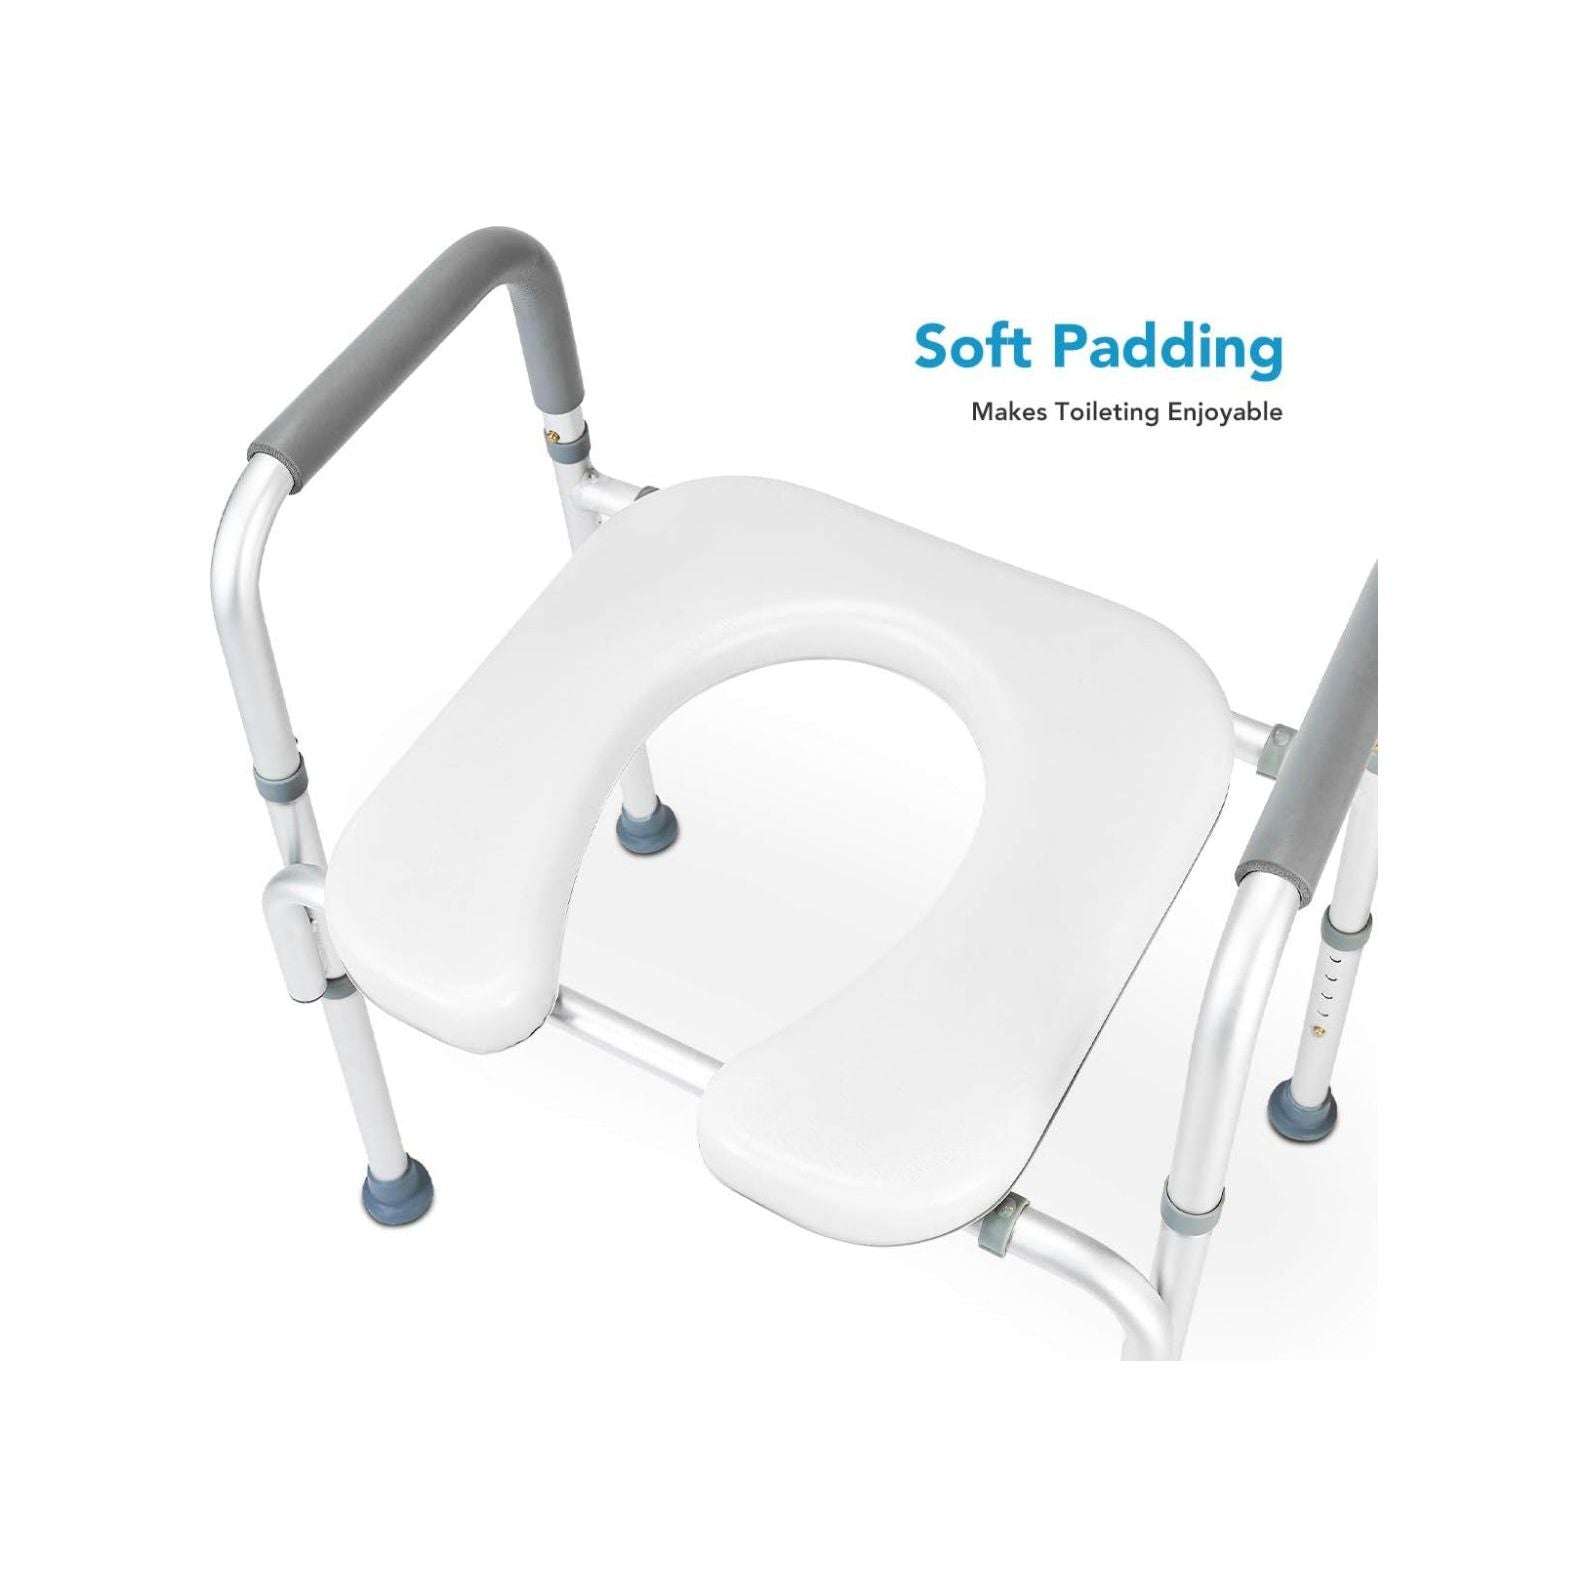 Raised Toilet Seat 300lb Heavy Duty Medical Raised Homecare Commode - Selzalot